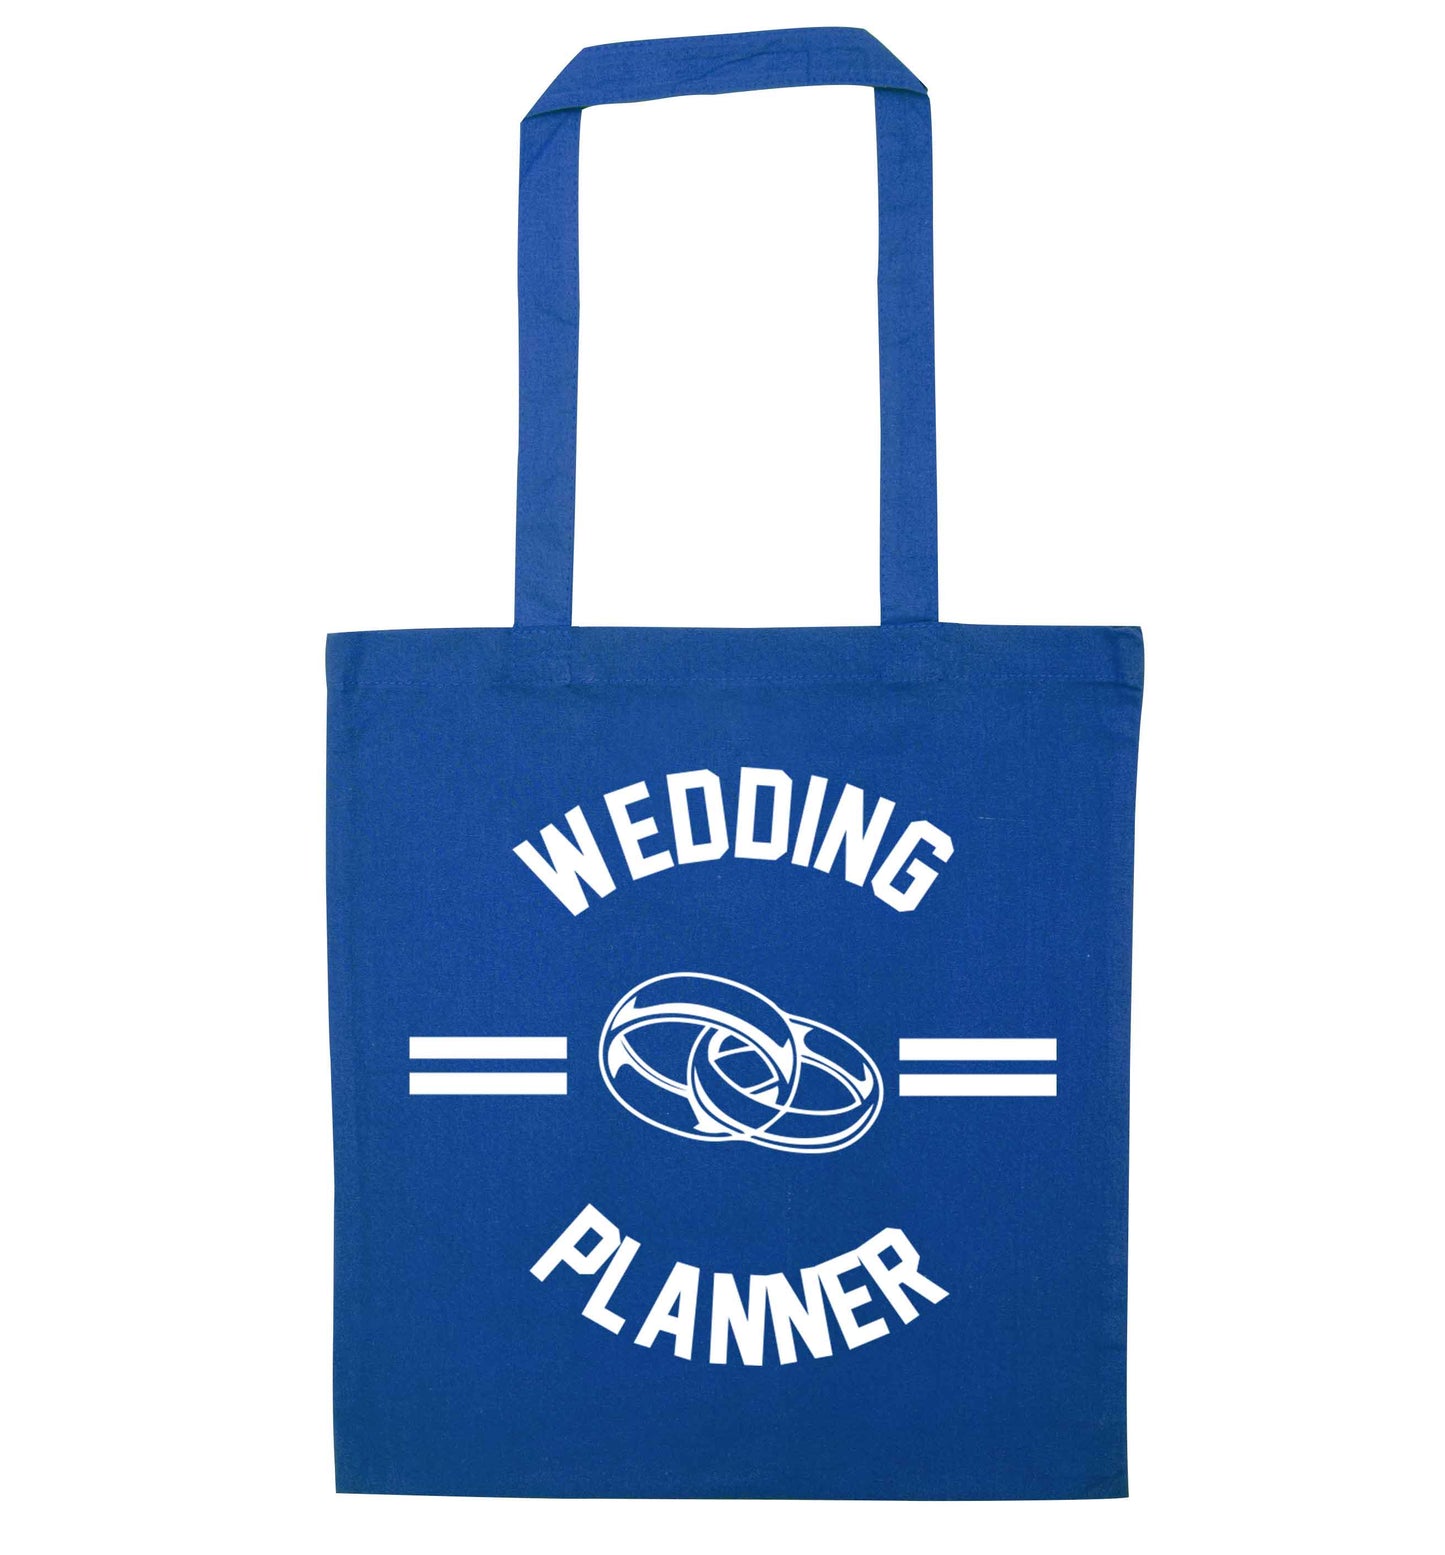 Wedding planner blue tote bag